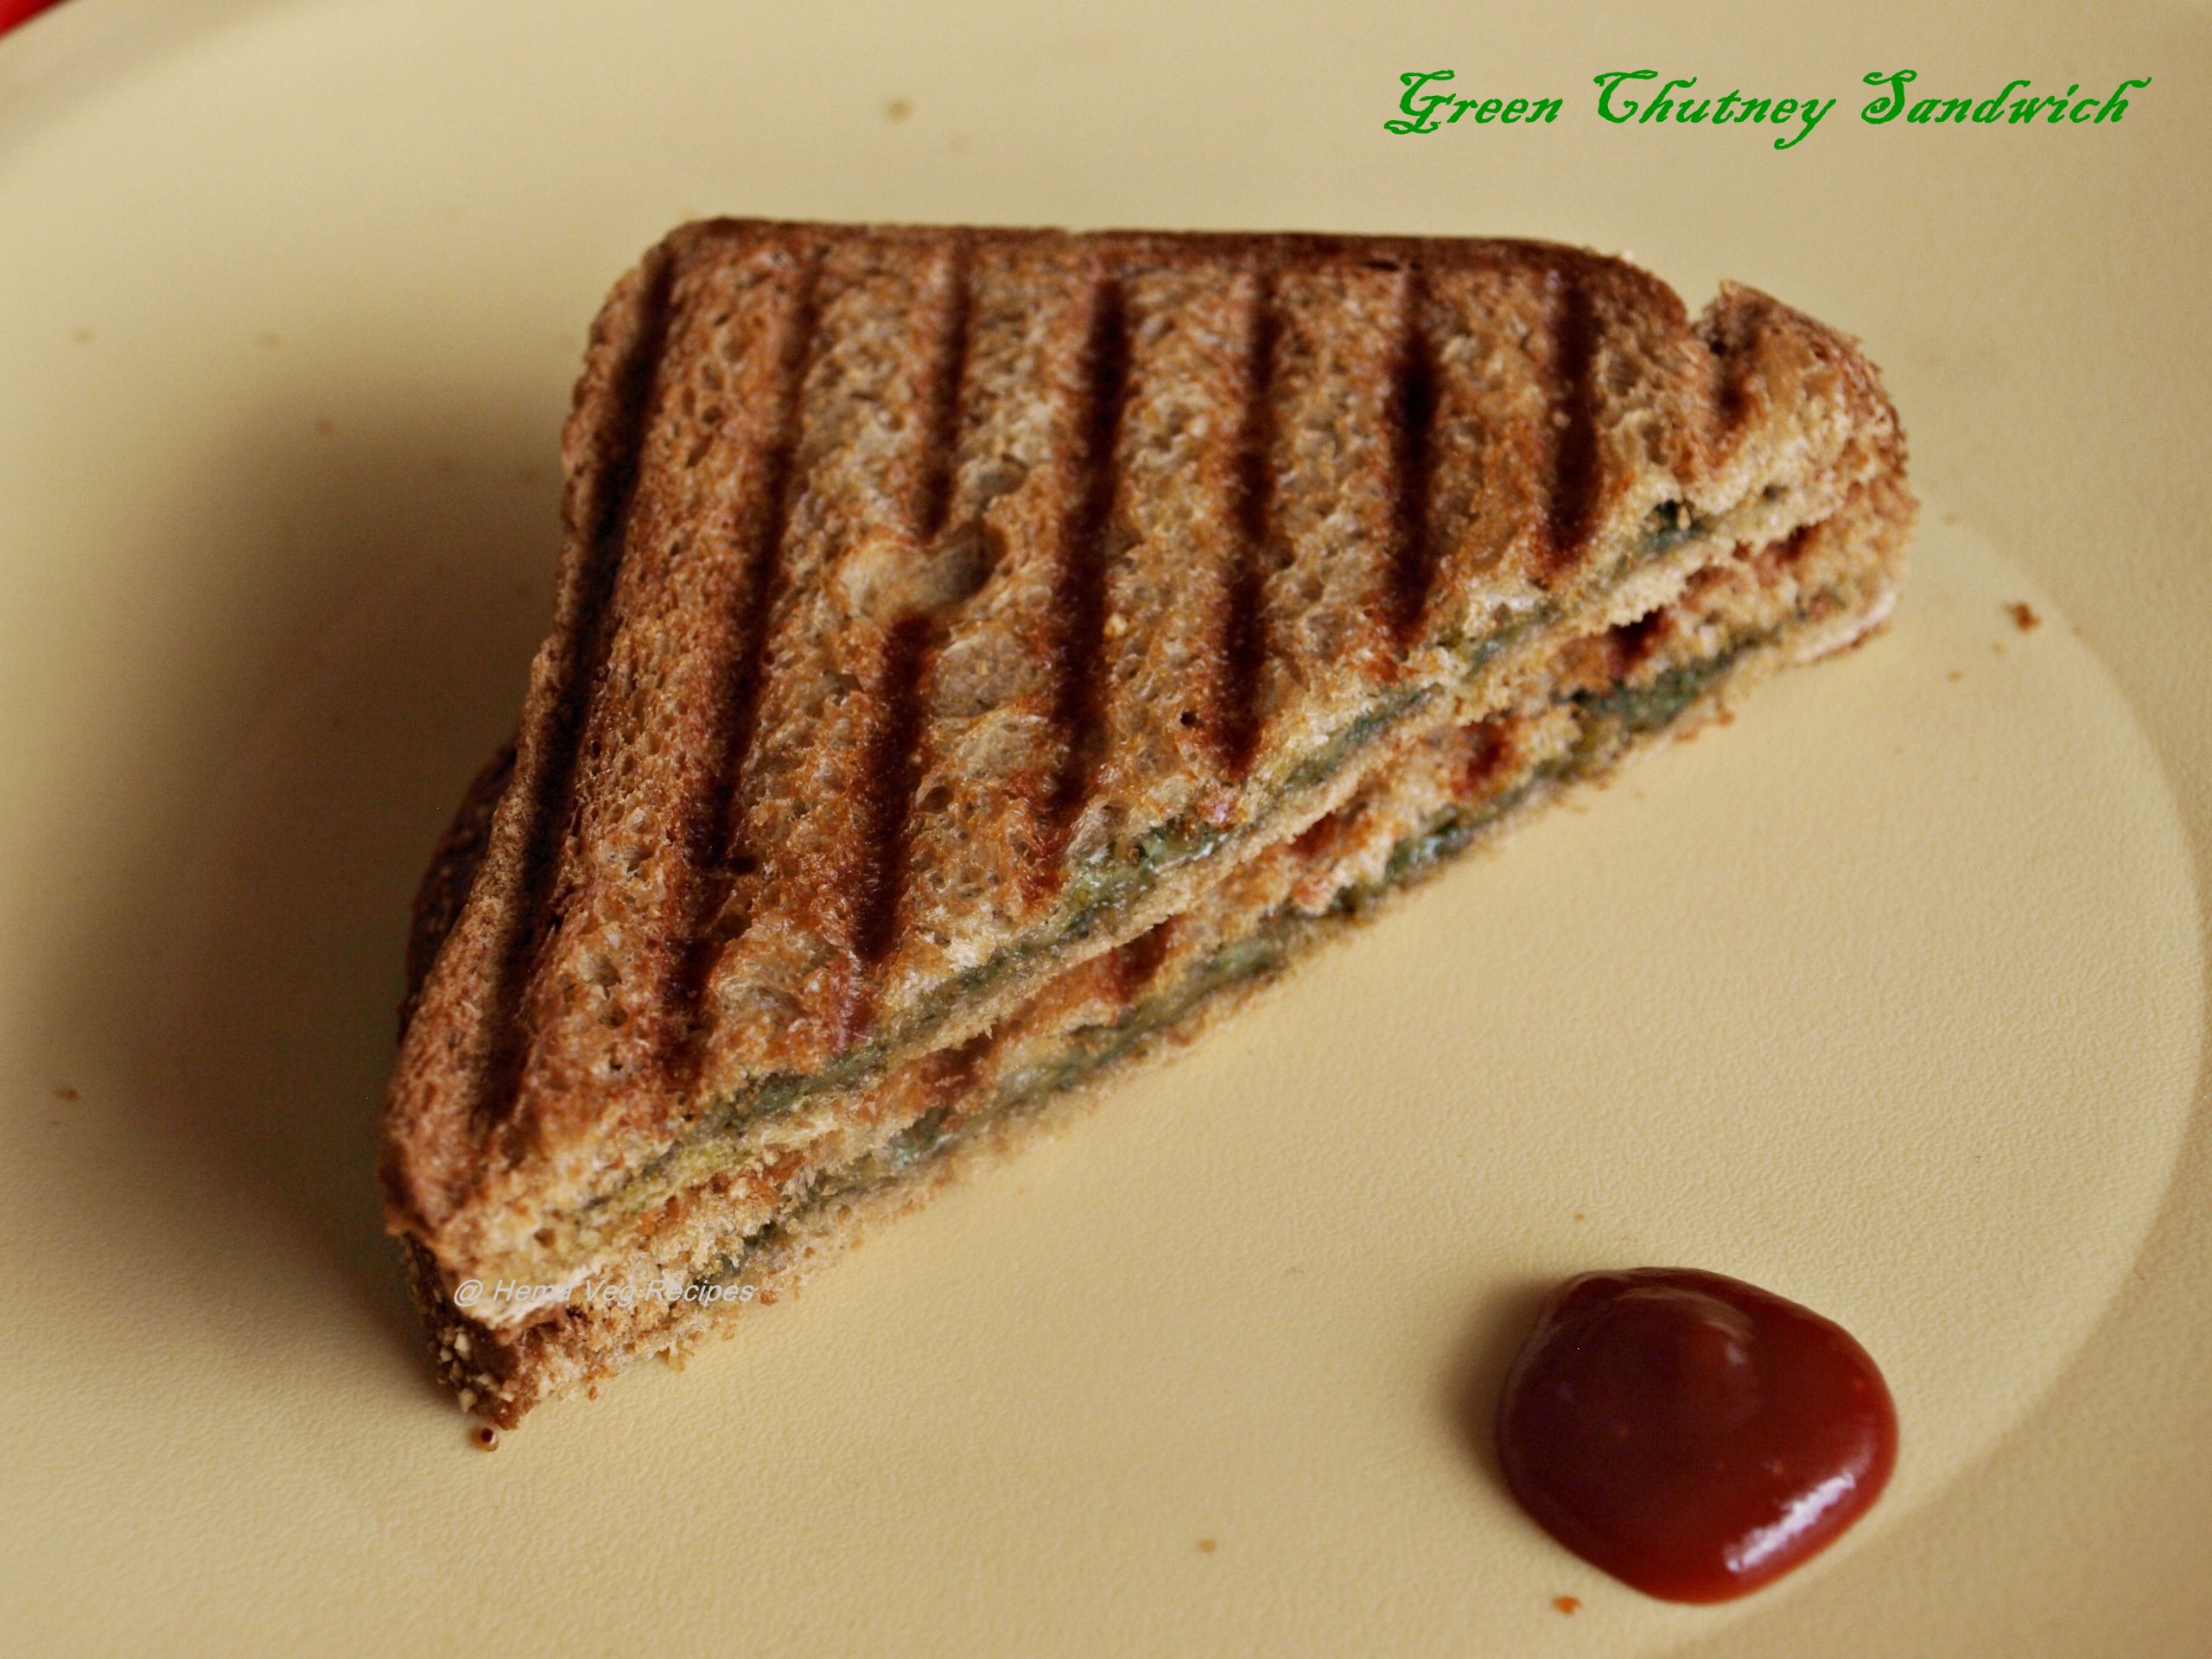 Green Chutney For Sandwich
 Green Chutney Sandwich Ve arian Recipes